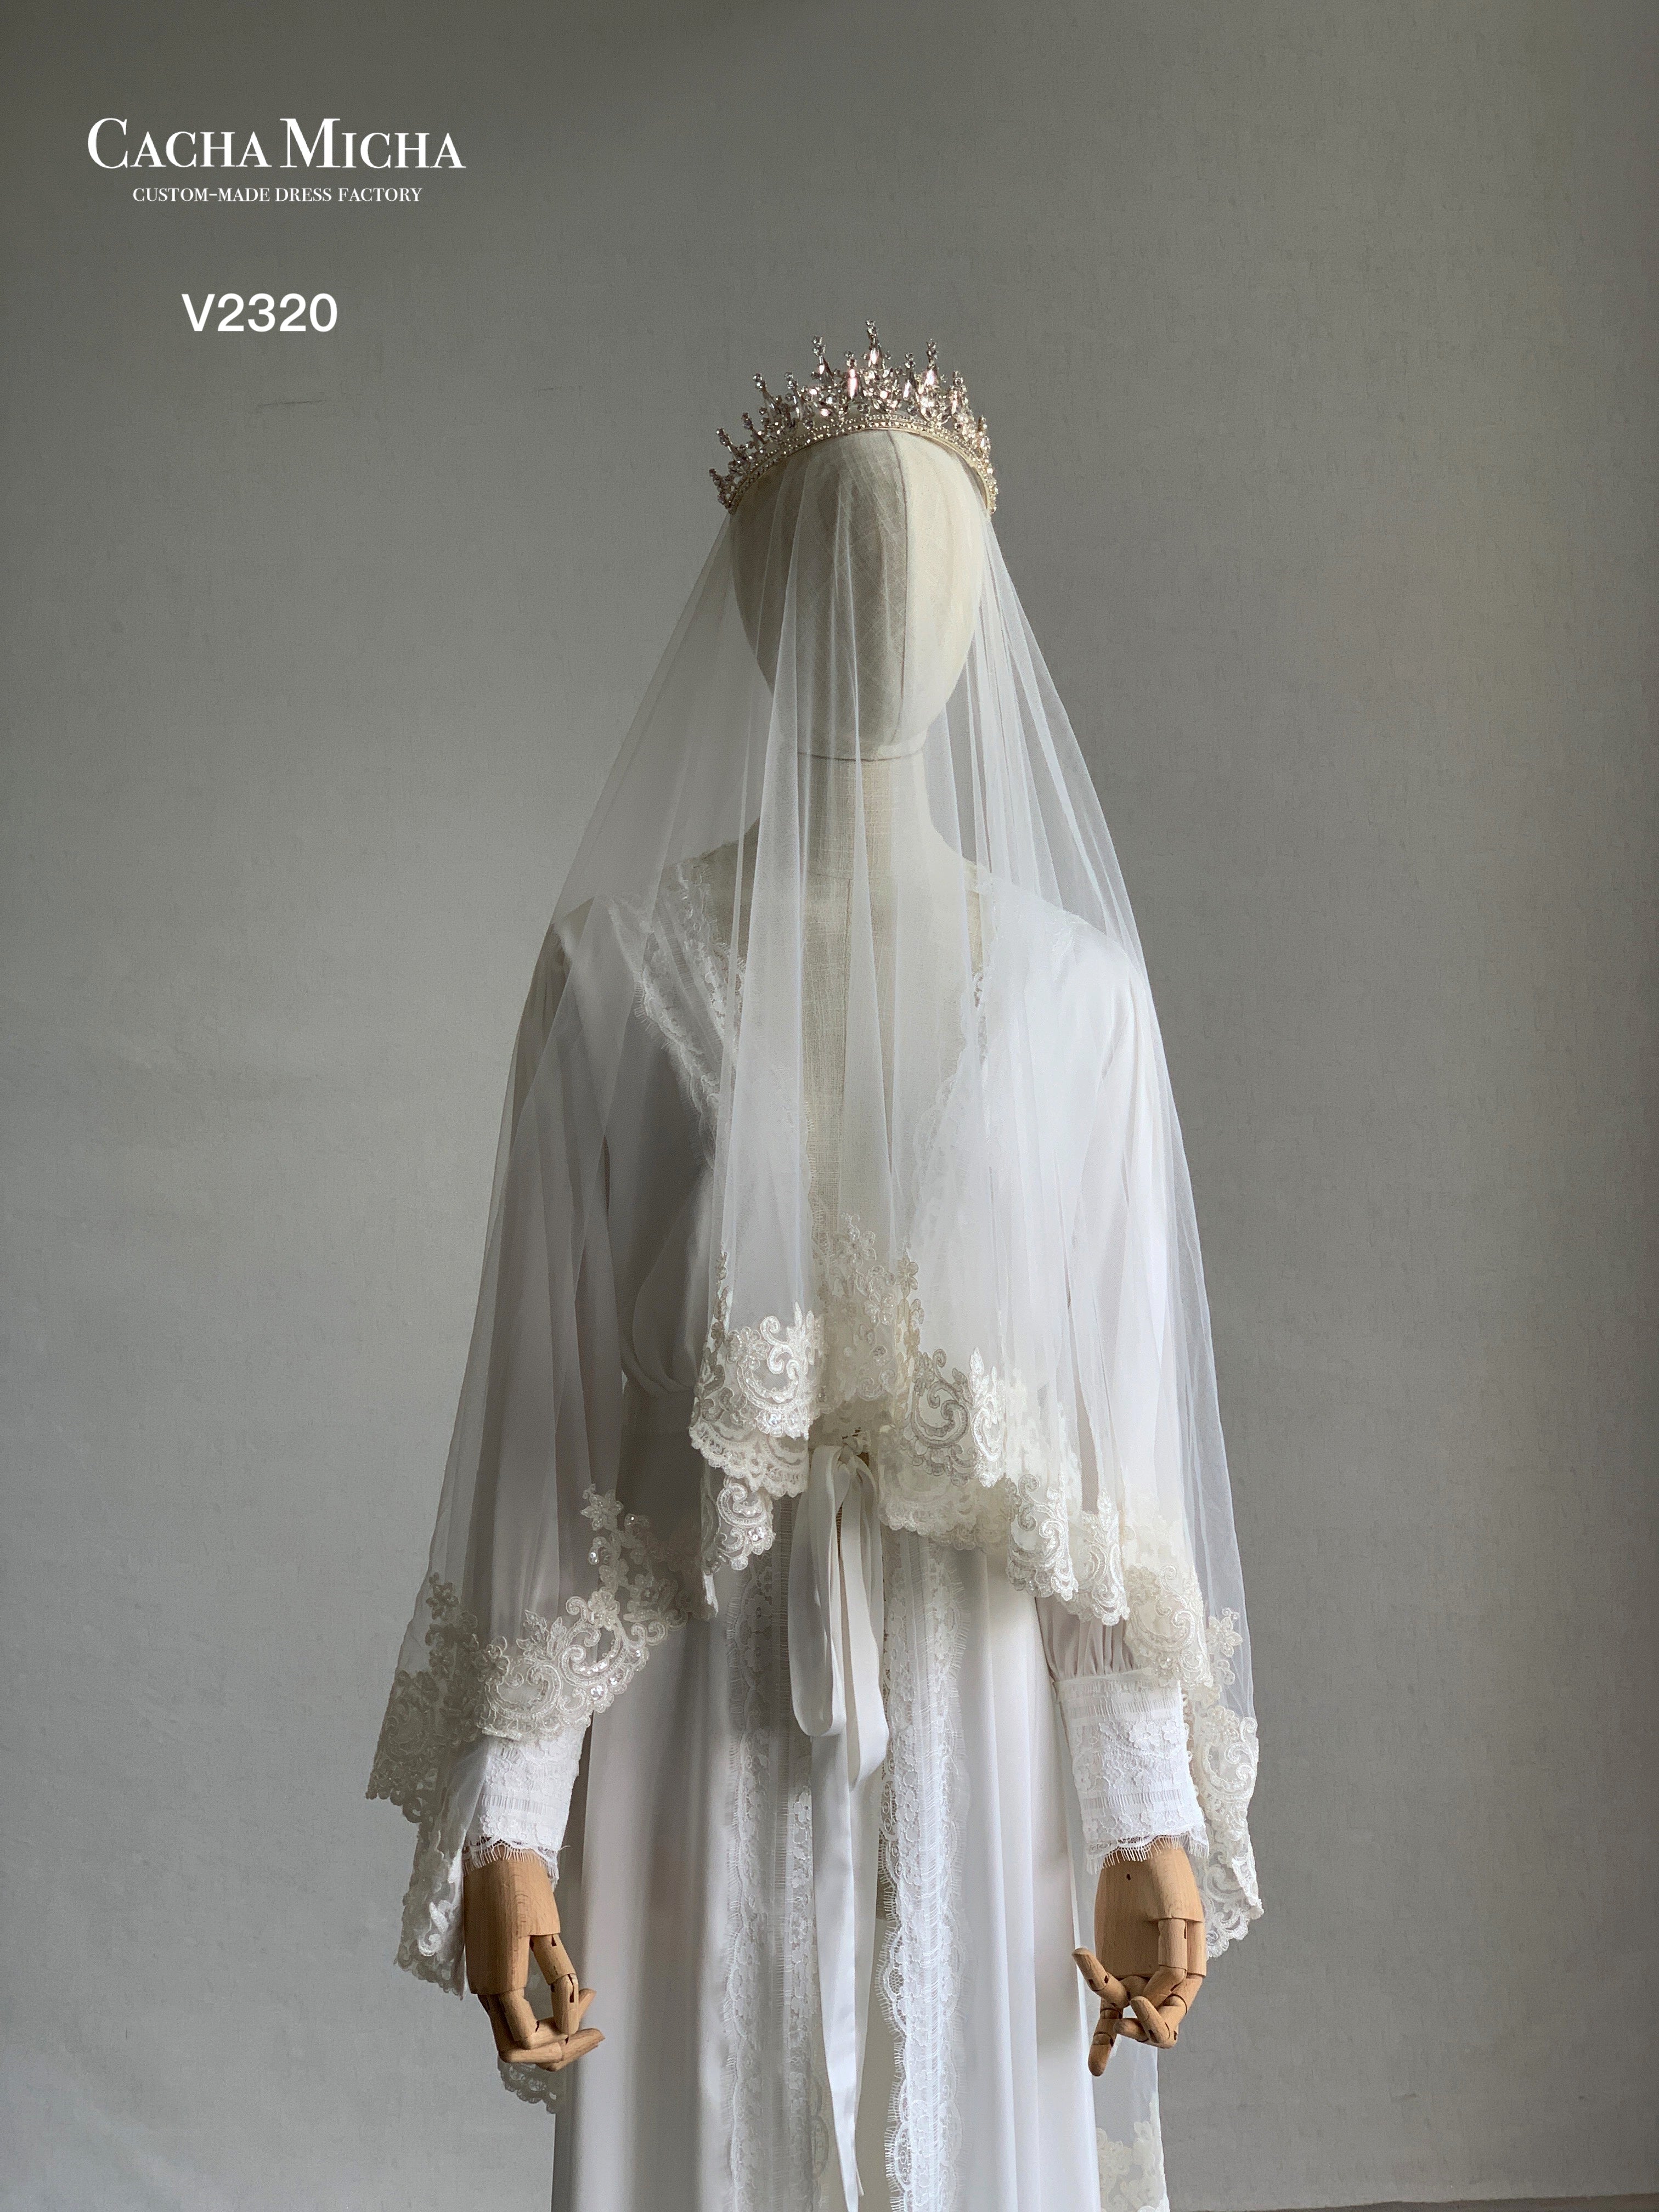 French Lace Trimming Waltz Length Bridal Veil V2320